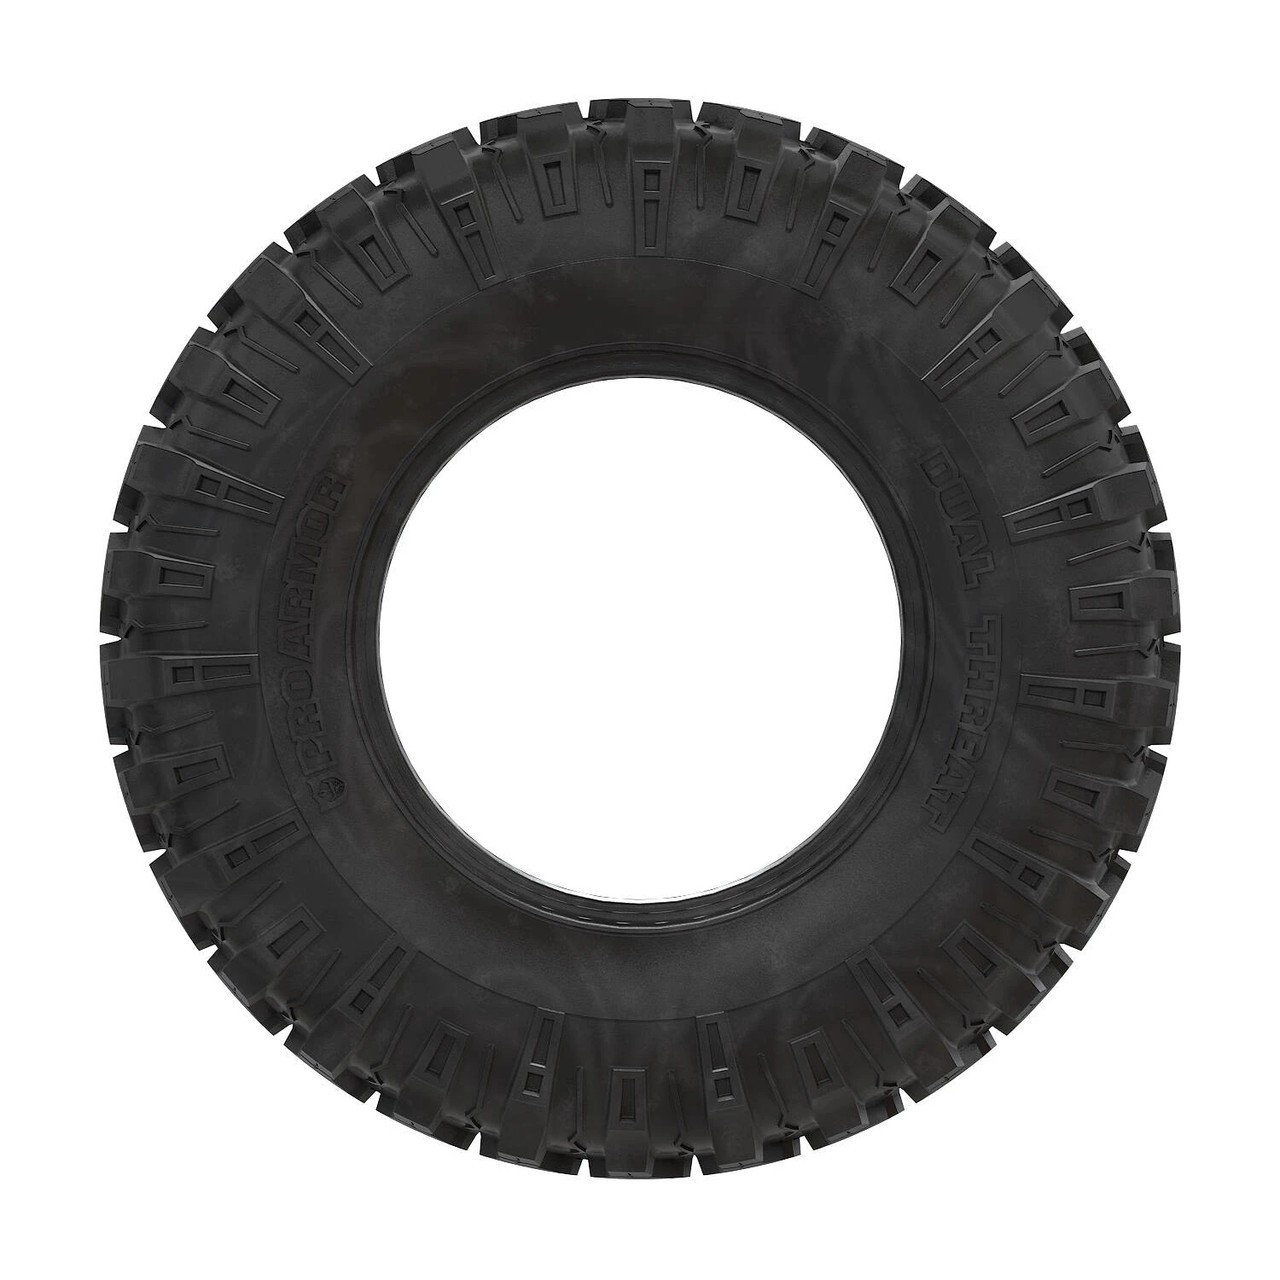 Polaris New OEM Pro Armor Wheel & Tire Set: Buckle & Dual-Threat, 29R14, 2883148